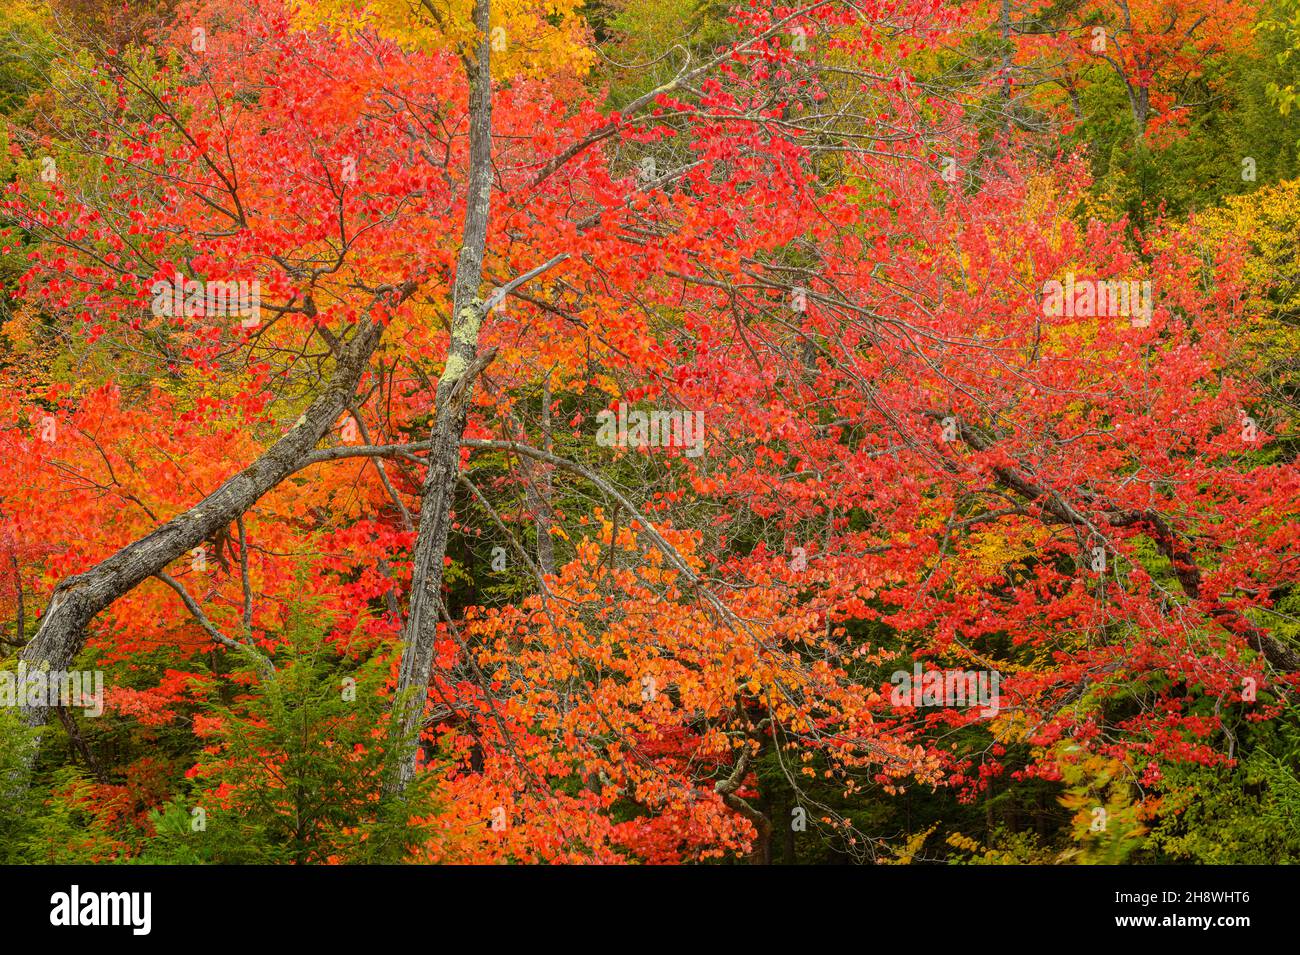 Autumn foliage in New England deciduous trees, Kancamagus Highway, White Mountain National Forest, New Hampshire, USA Stock Photo